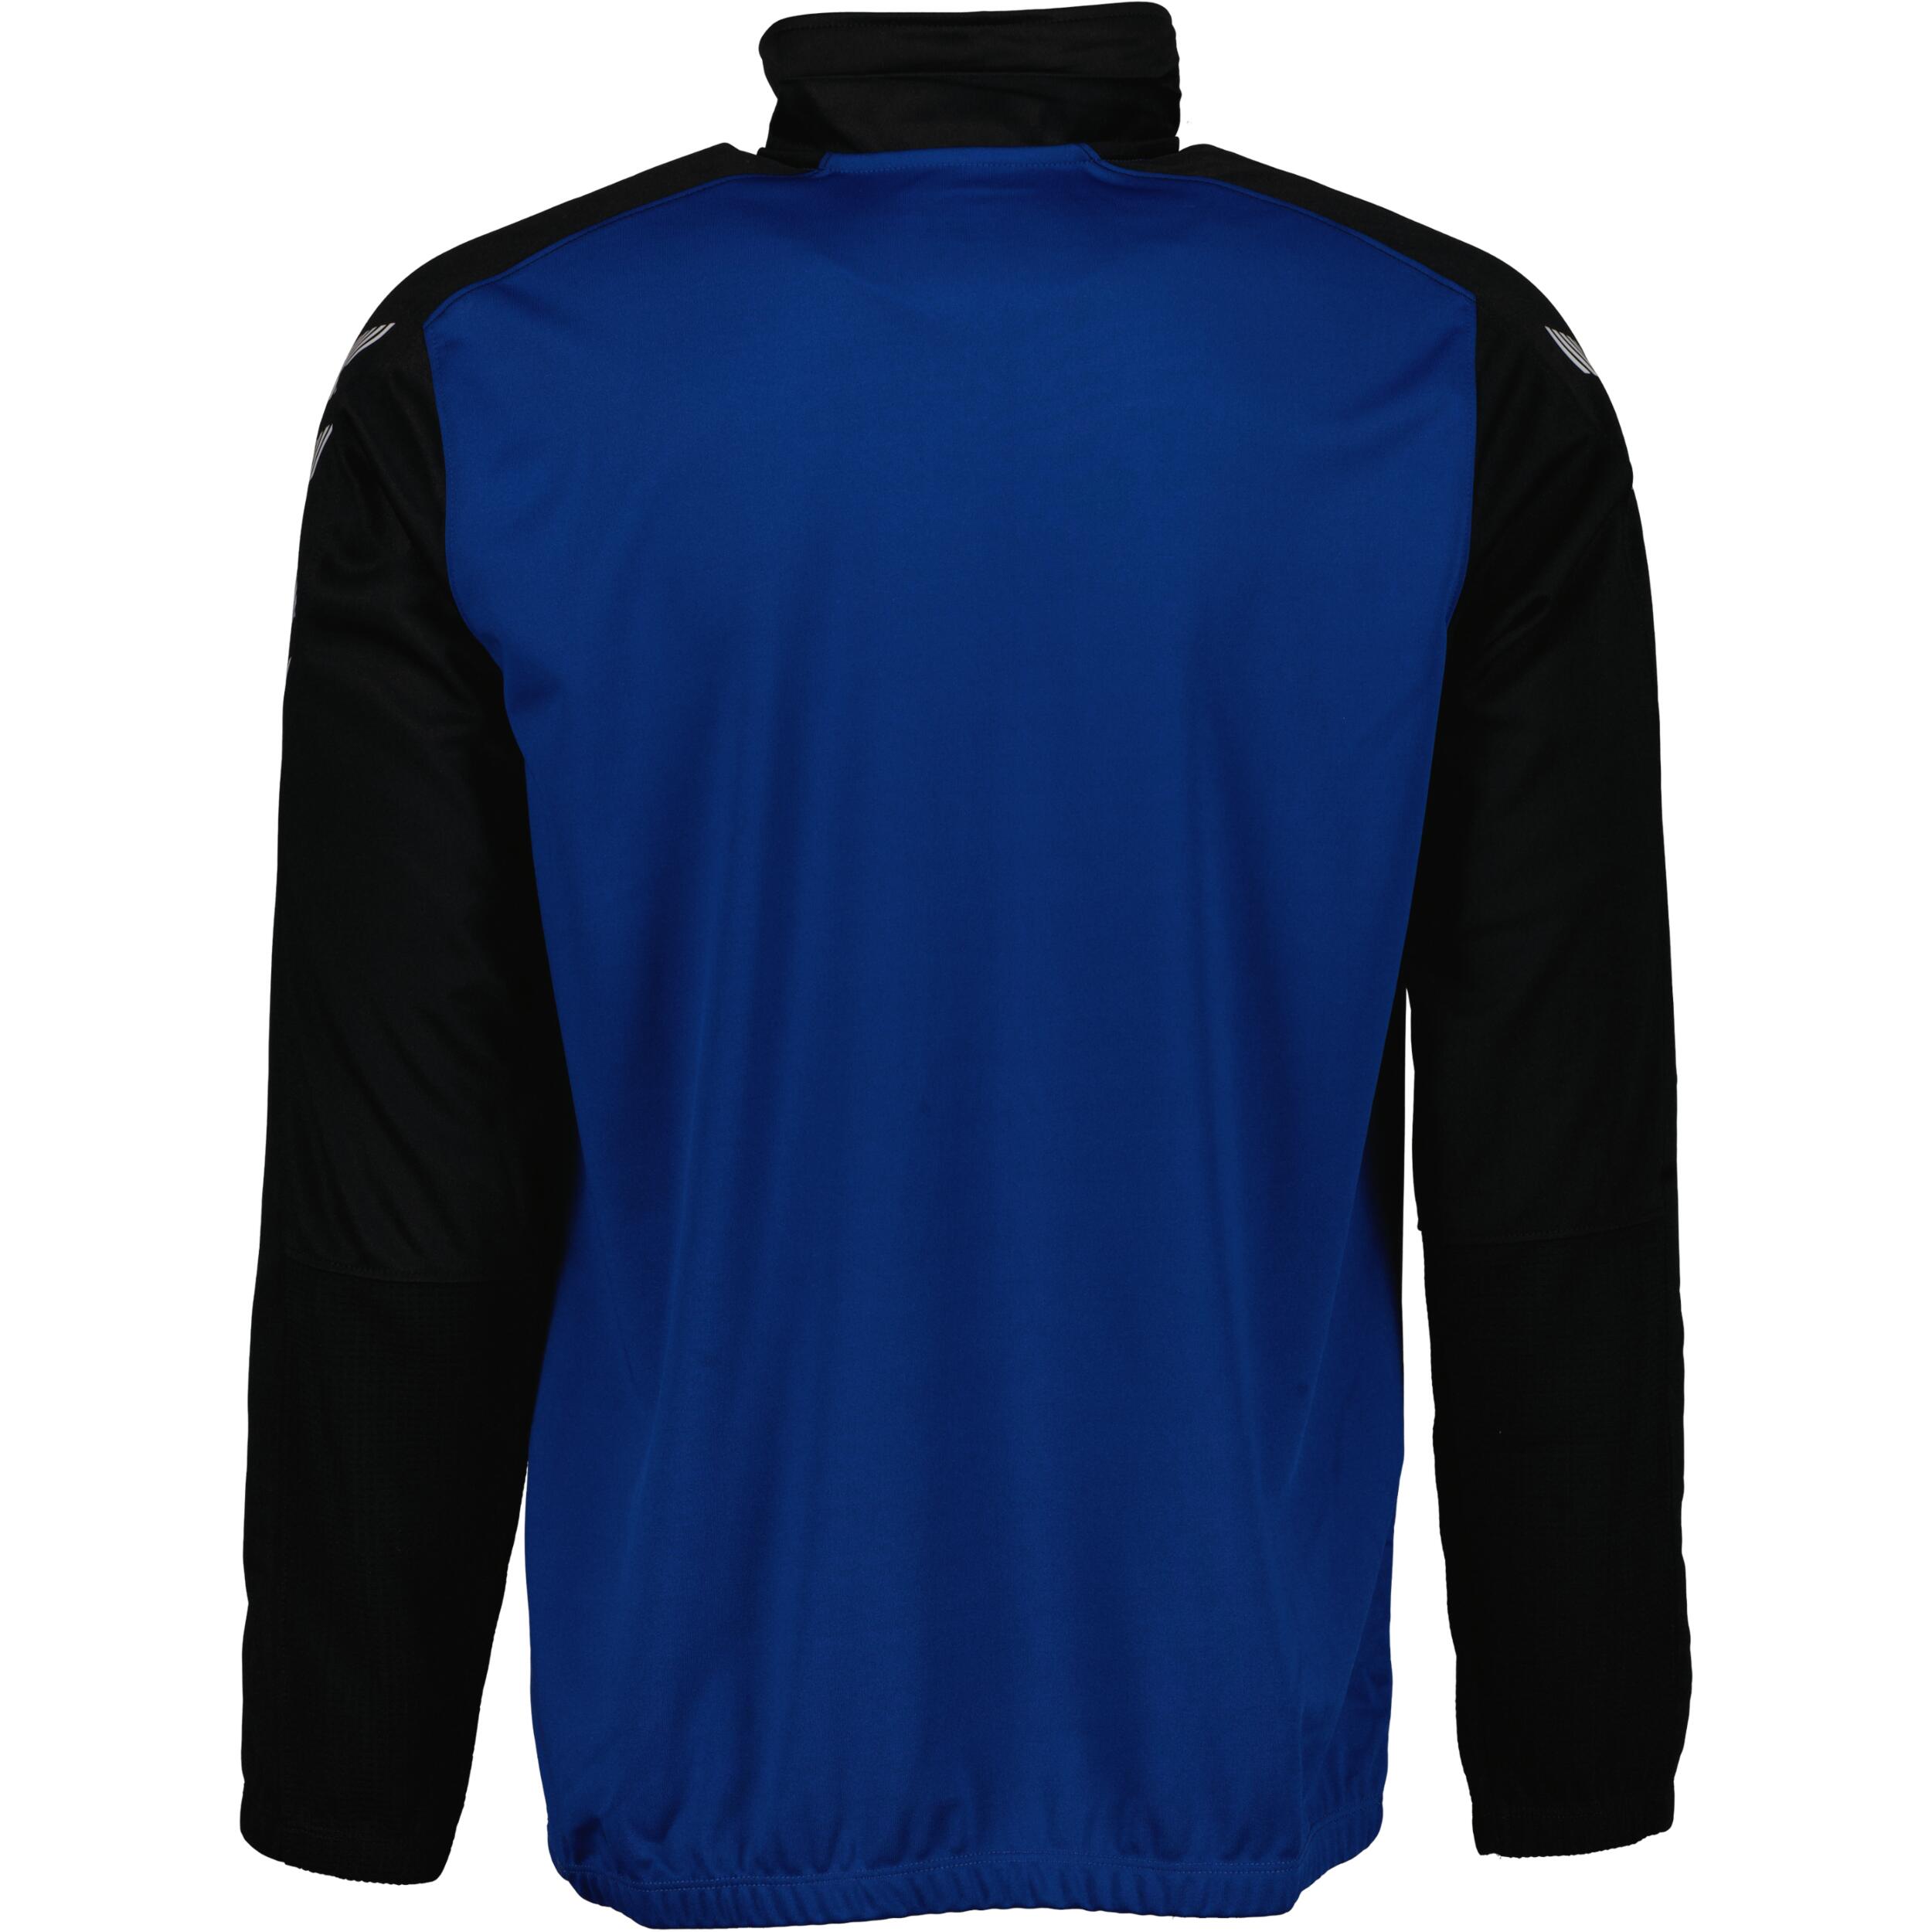 Half zip sweat for men, great for football, in true blue/black 2/3